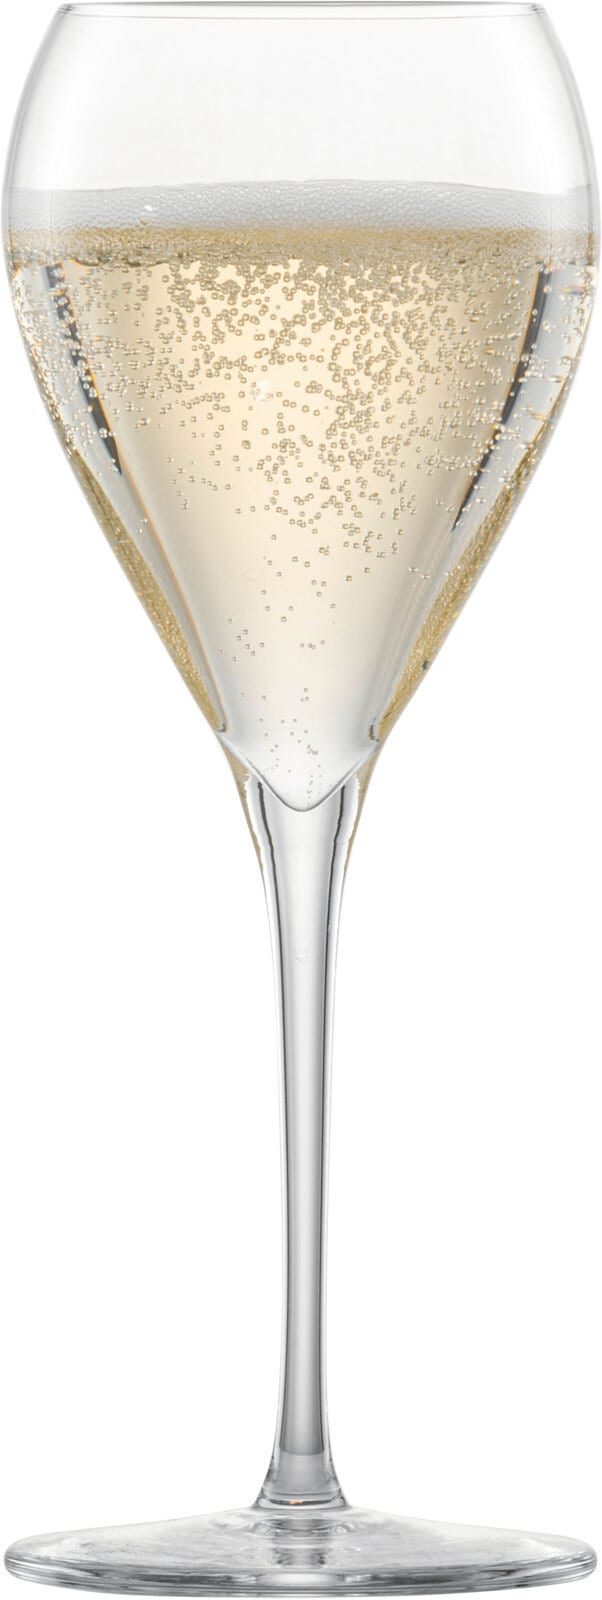 SCHOTT ZWIESEL Champagnerglas BAR SPECIAL 6er Set - je 195 ml